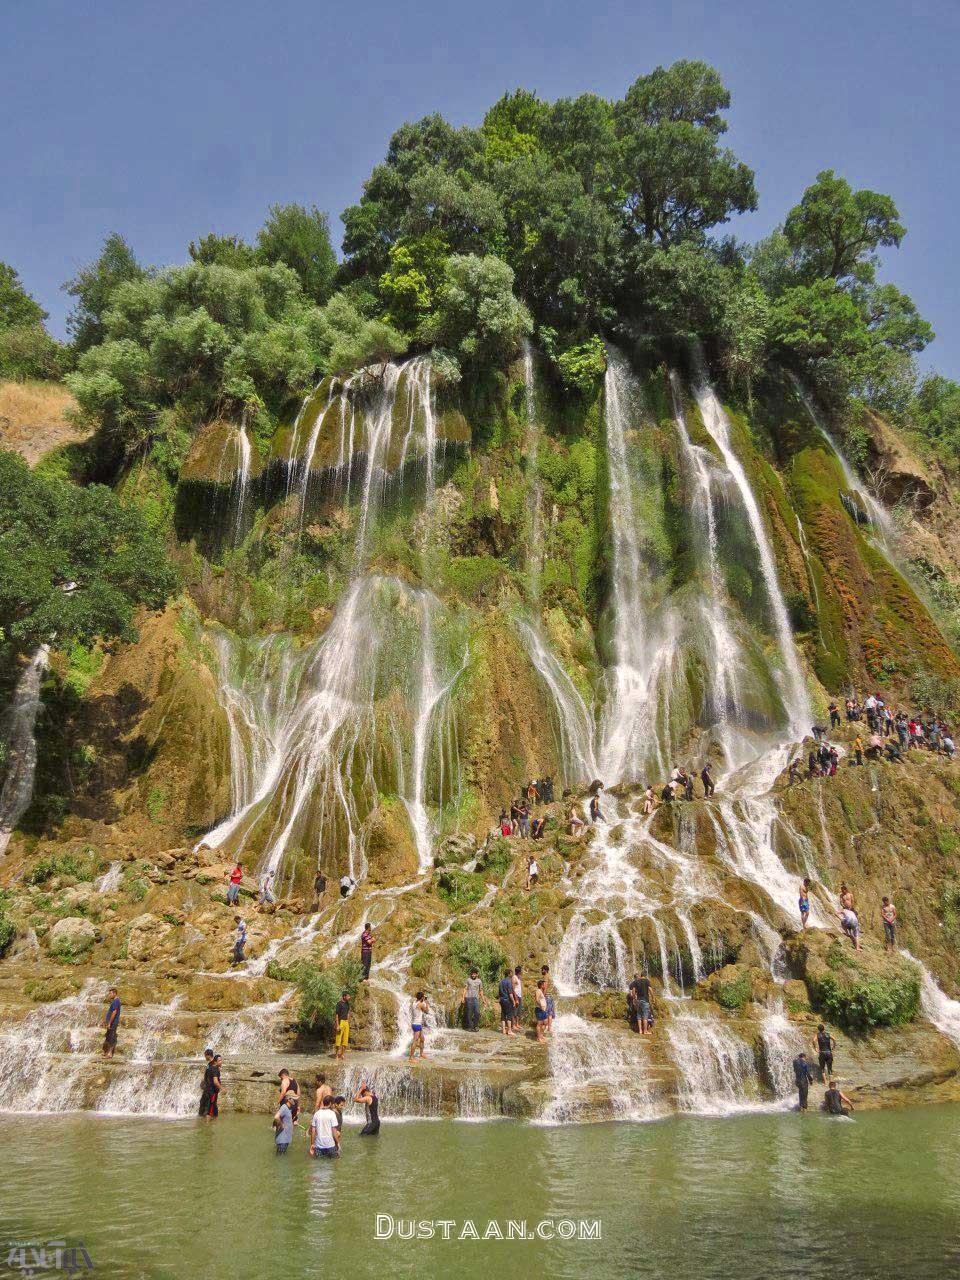 www.dustaan.com-تصاویری فوق العاده زیبا از آبشار بیشه در لرستان